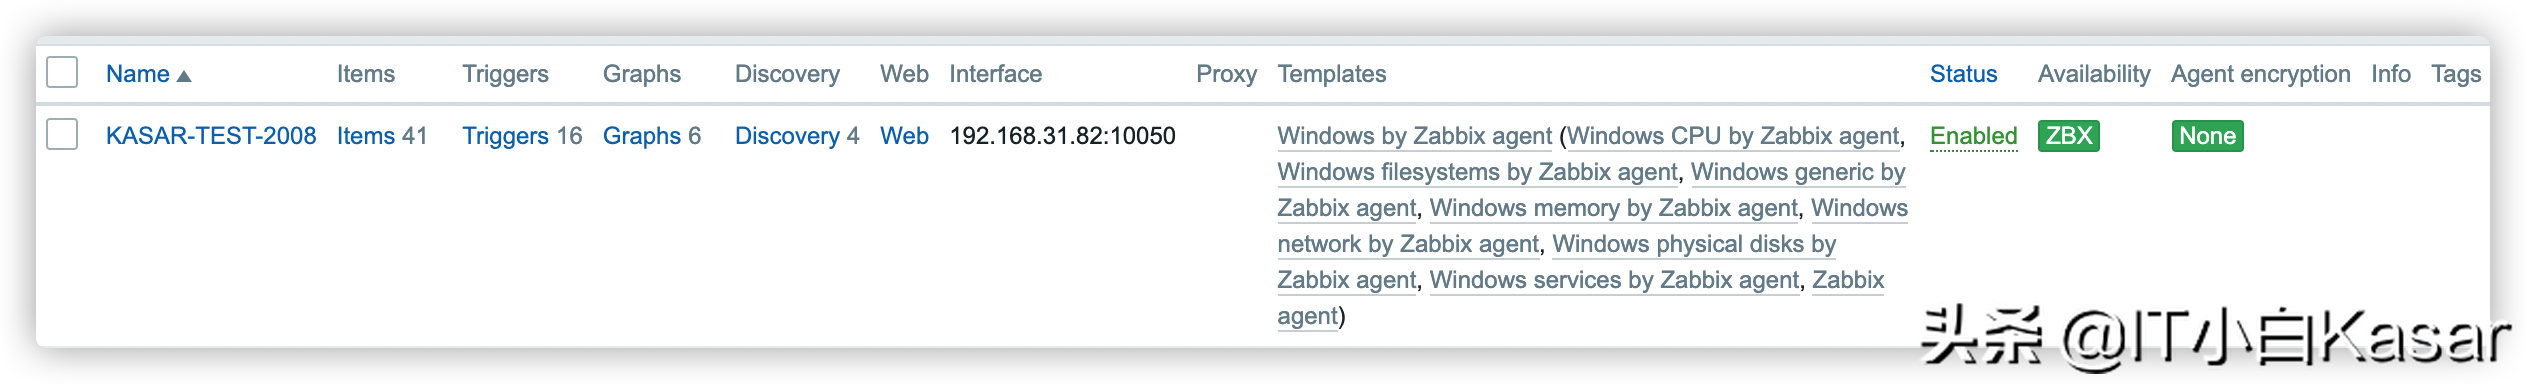 Zabbix由浅入深之主机自动化注册（Windows篇）